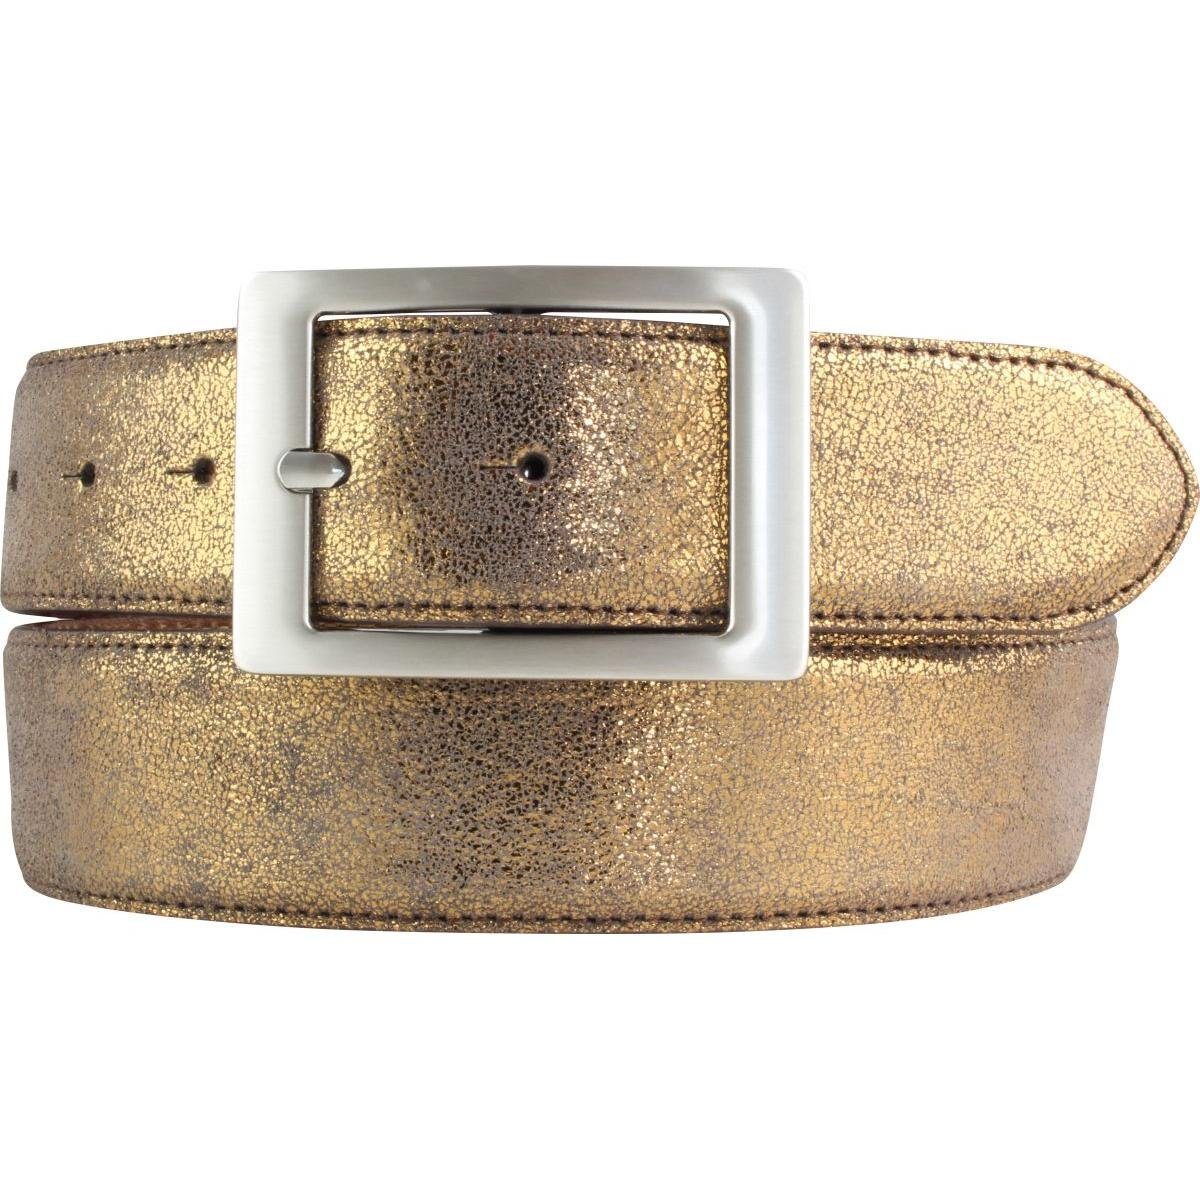 Leder-Gürte 4cm Hochwertiger Silber BELTINGER Gürtel - Metall-Optik Bronze, Ledergürtel Doppel-Schließe mit